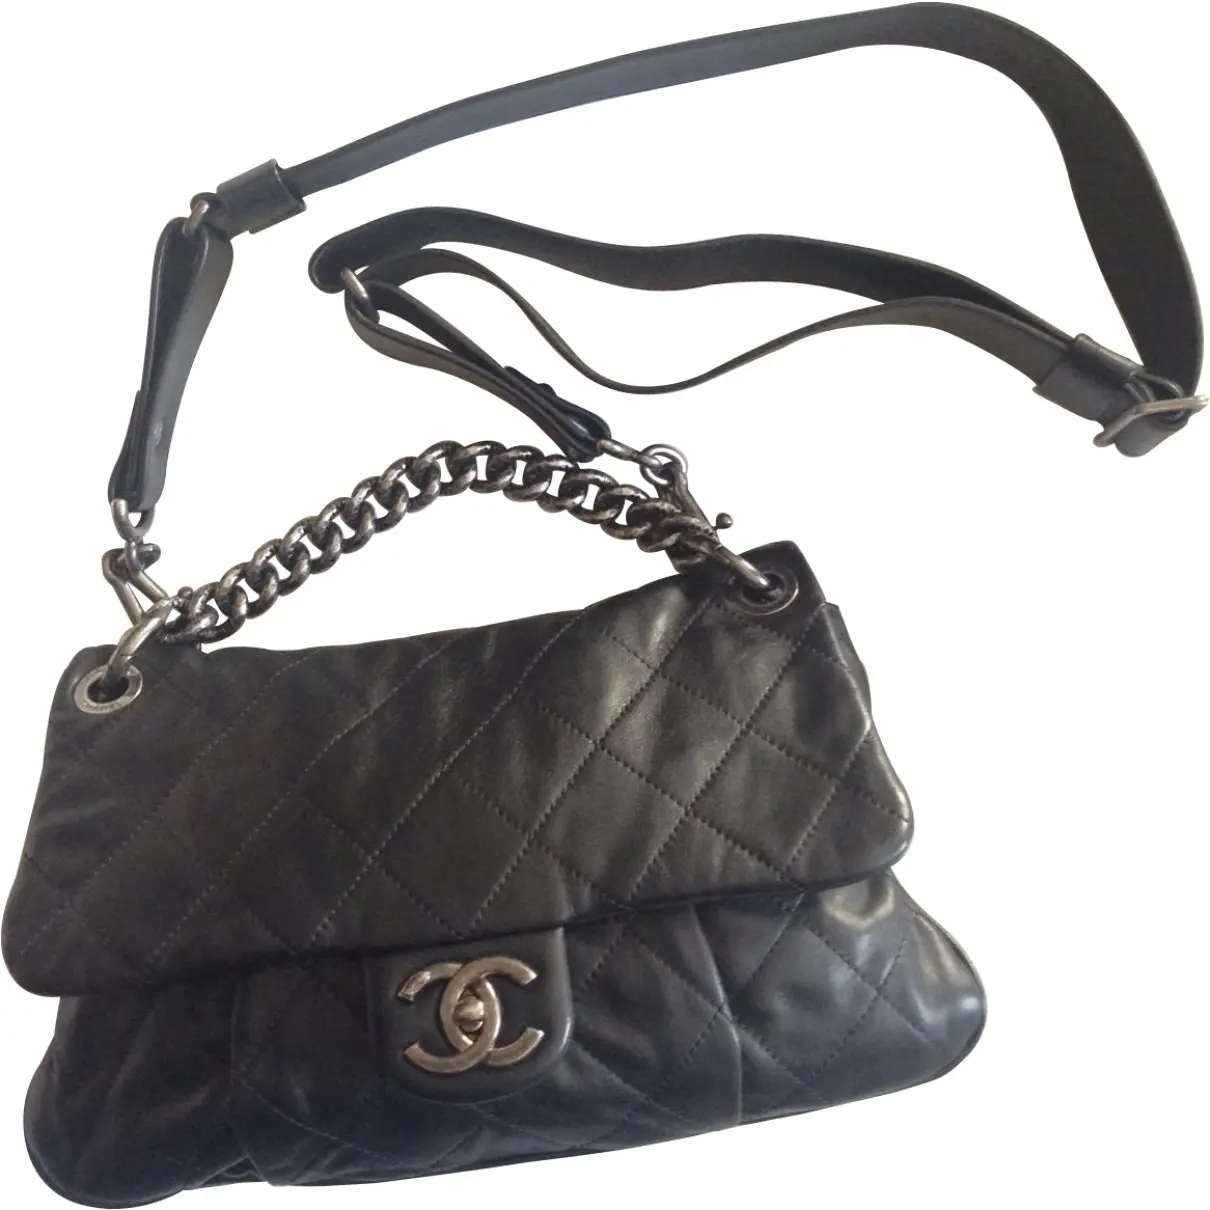 Black Leather Handbag Chanel